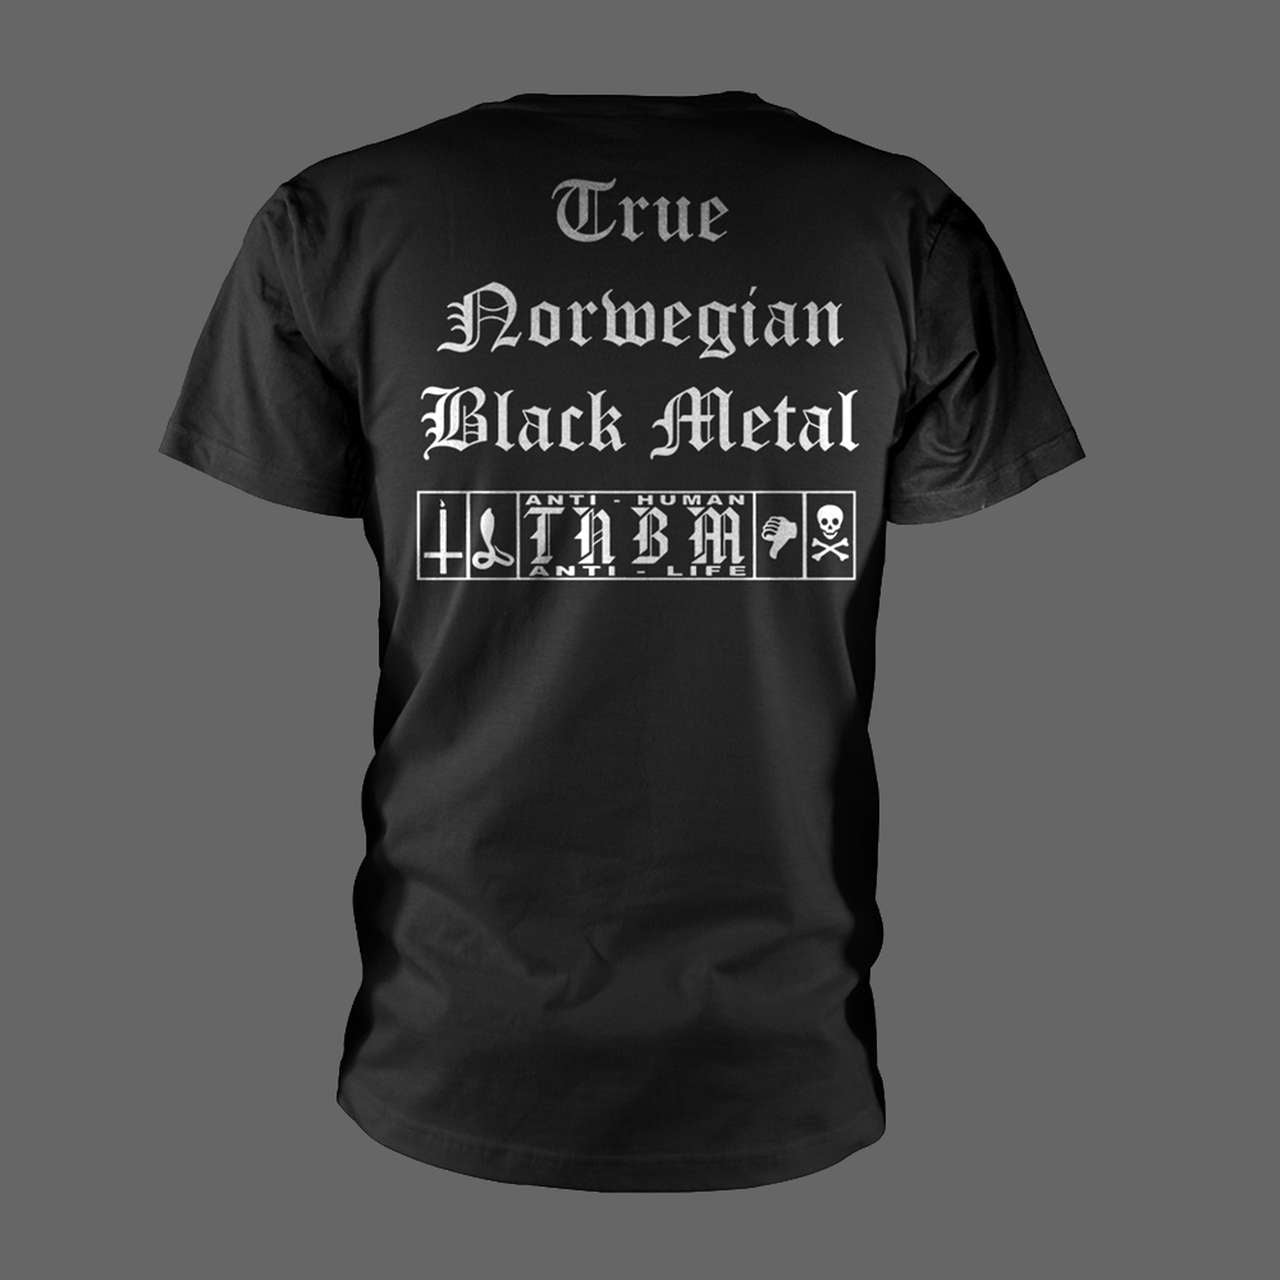 Tsjuder - True Norwegian Black Metal (T-Shirt)